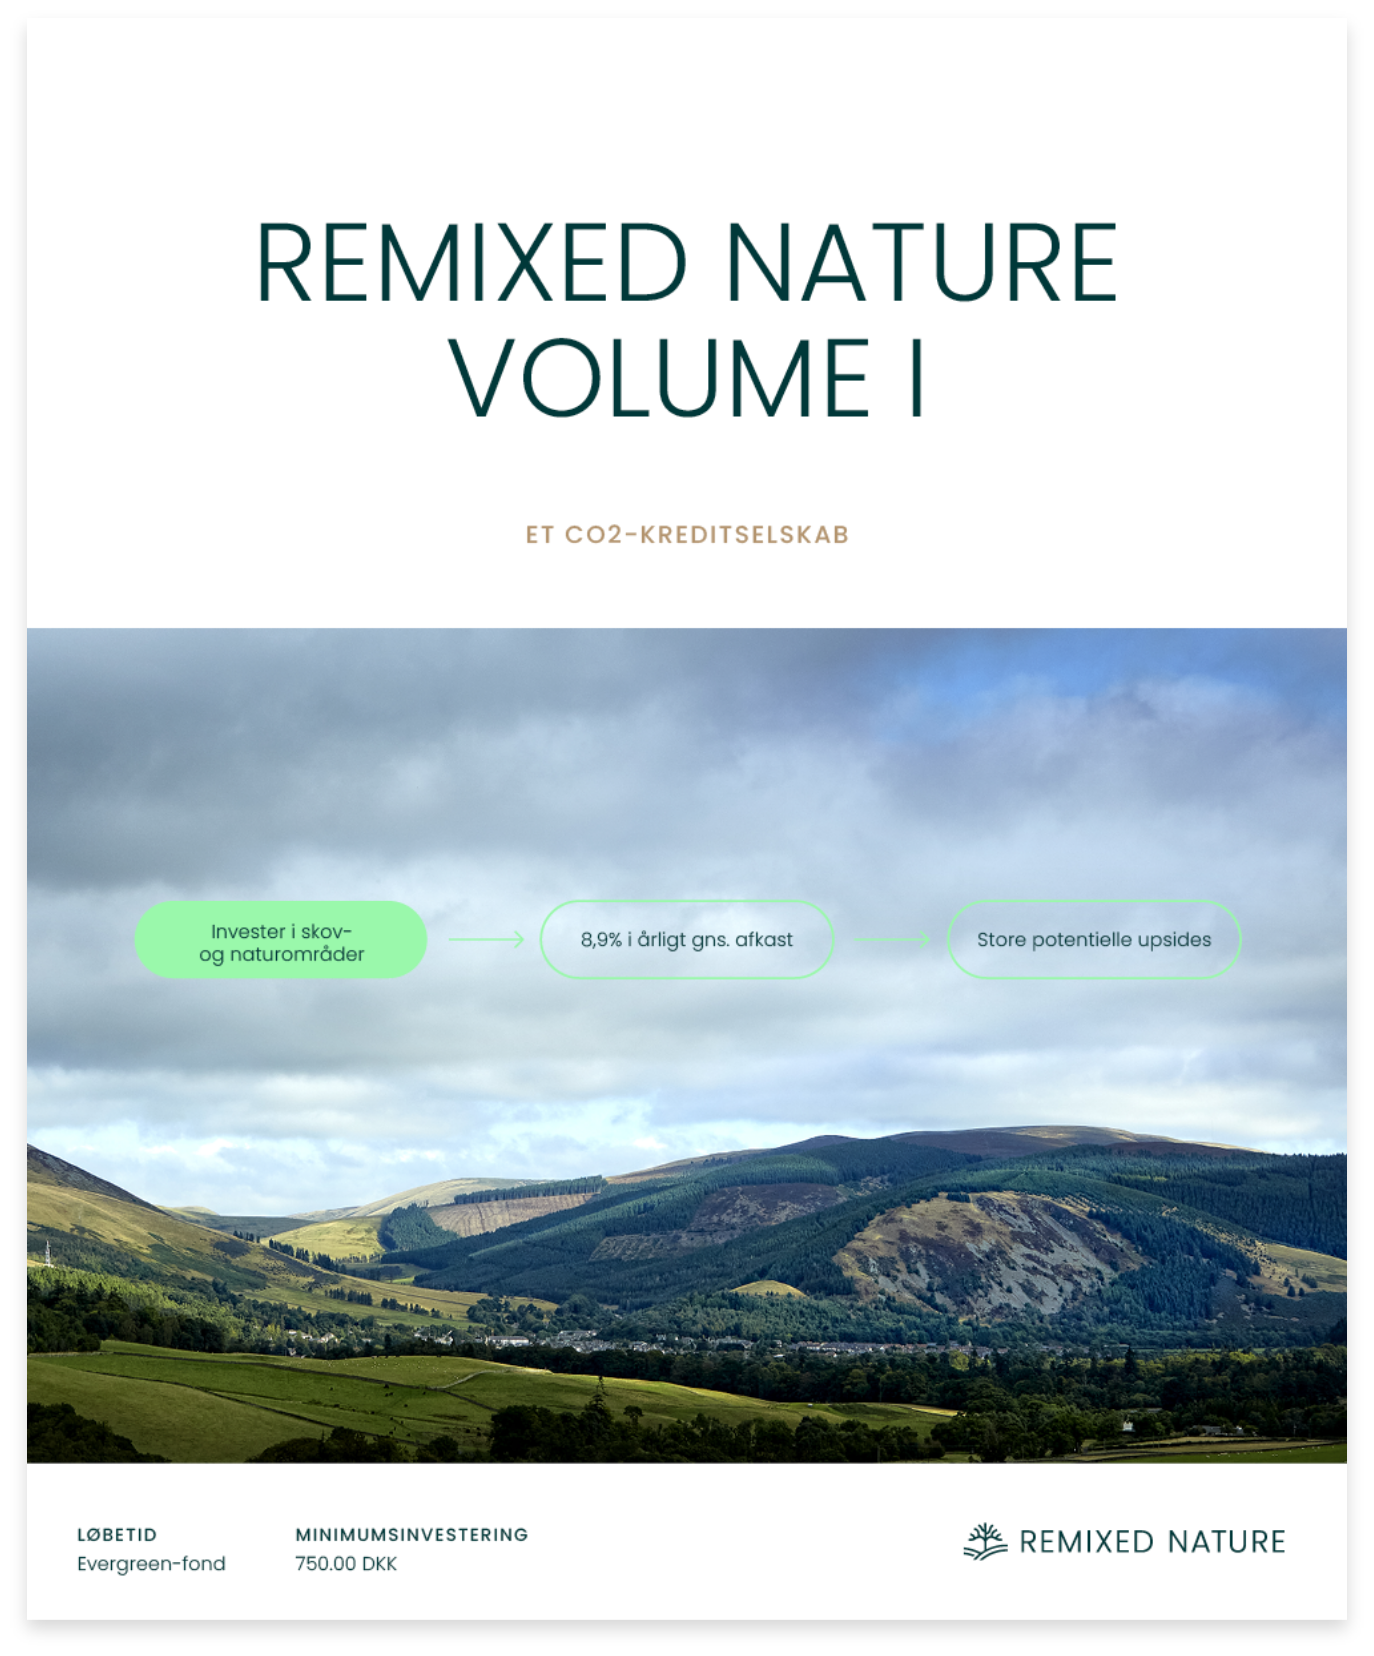 Remixed Nature Volume I